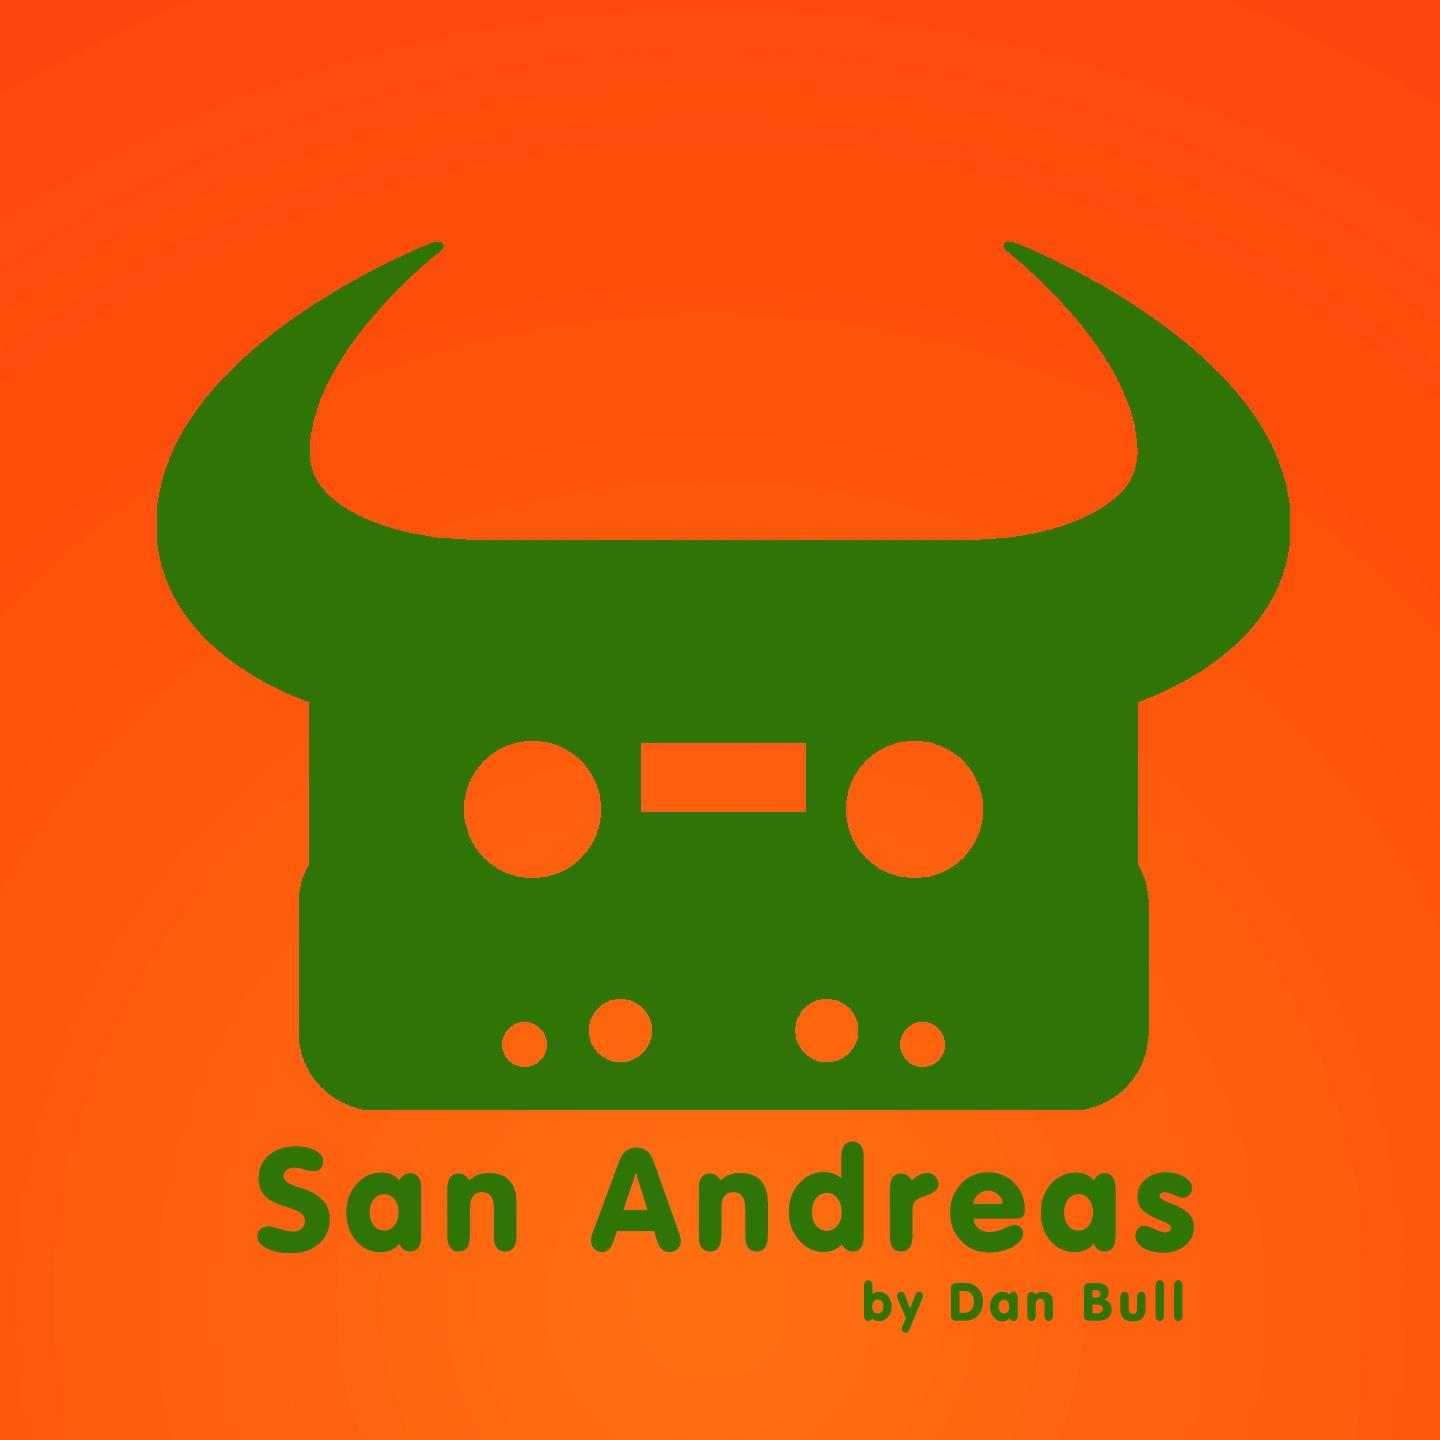 San Andreas (GTA San Andreas Rap)